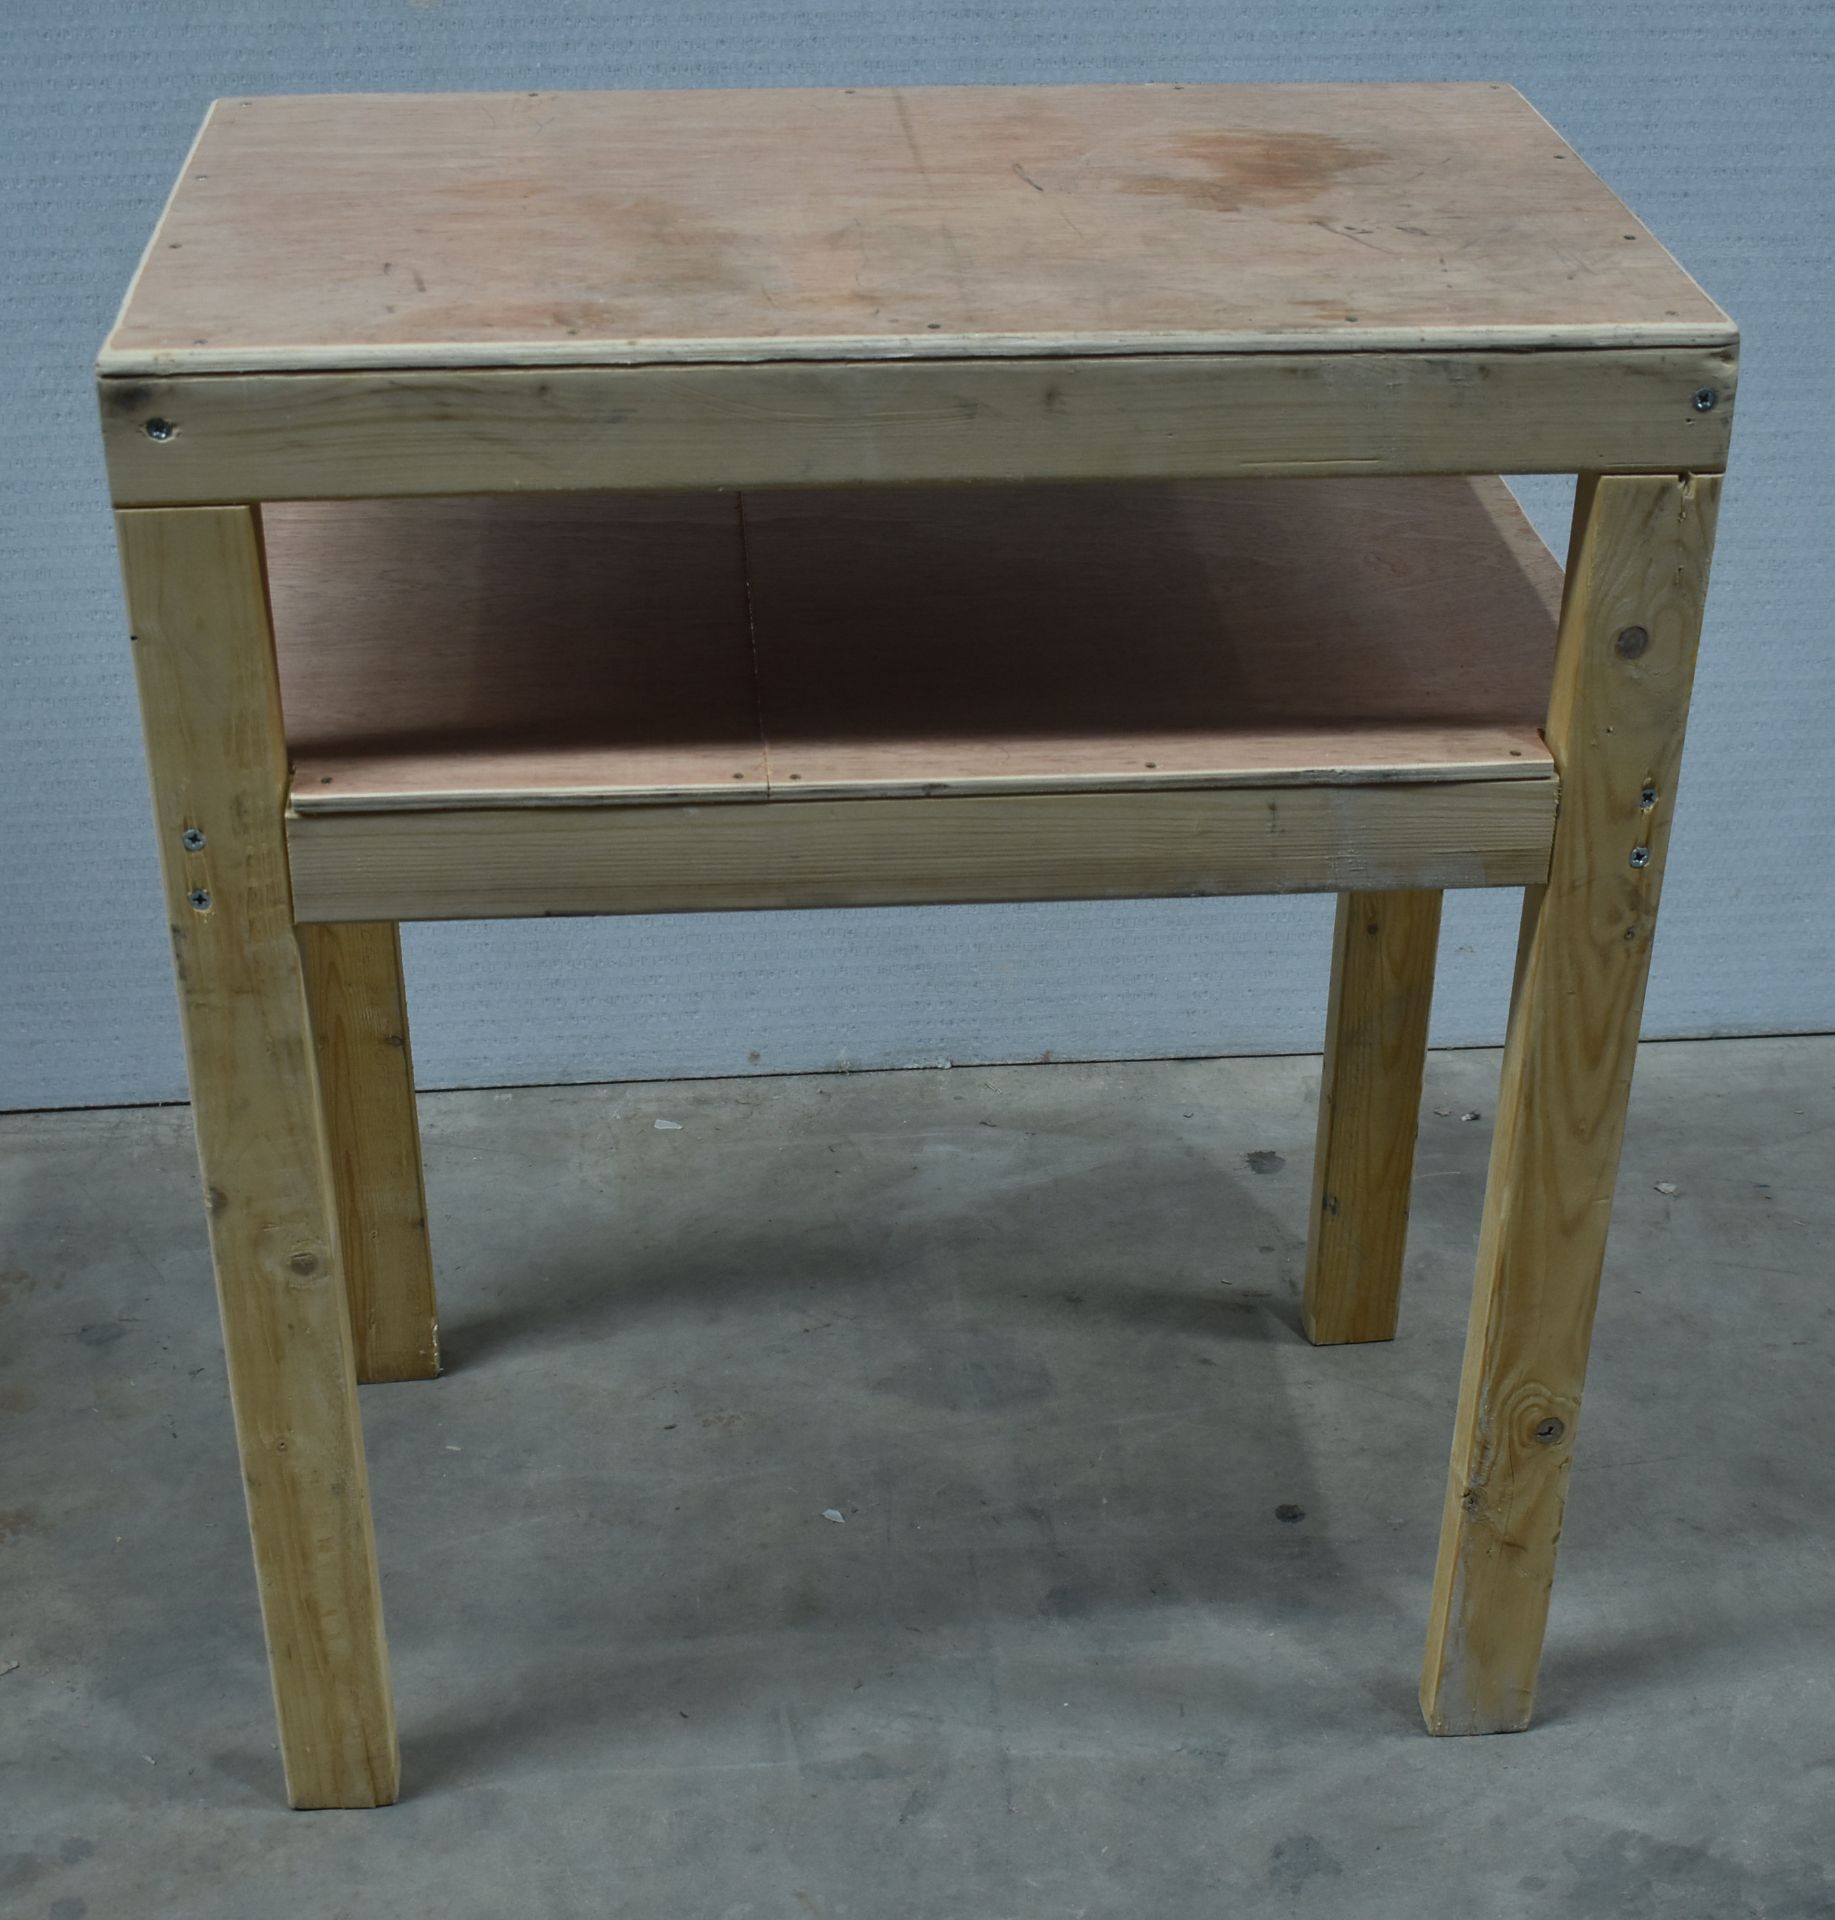 1 x Small Wooden Workbench - 75(w) x 42(d) x 89(h) cm - Ref: K286 - CL905 - Location: Altrincham